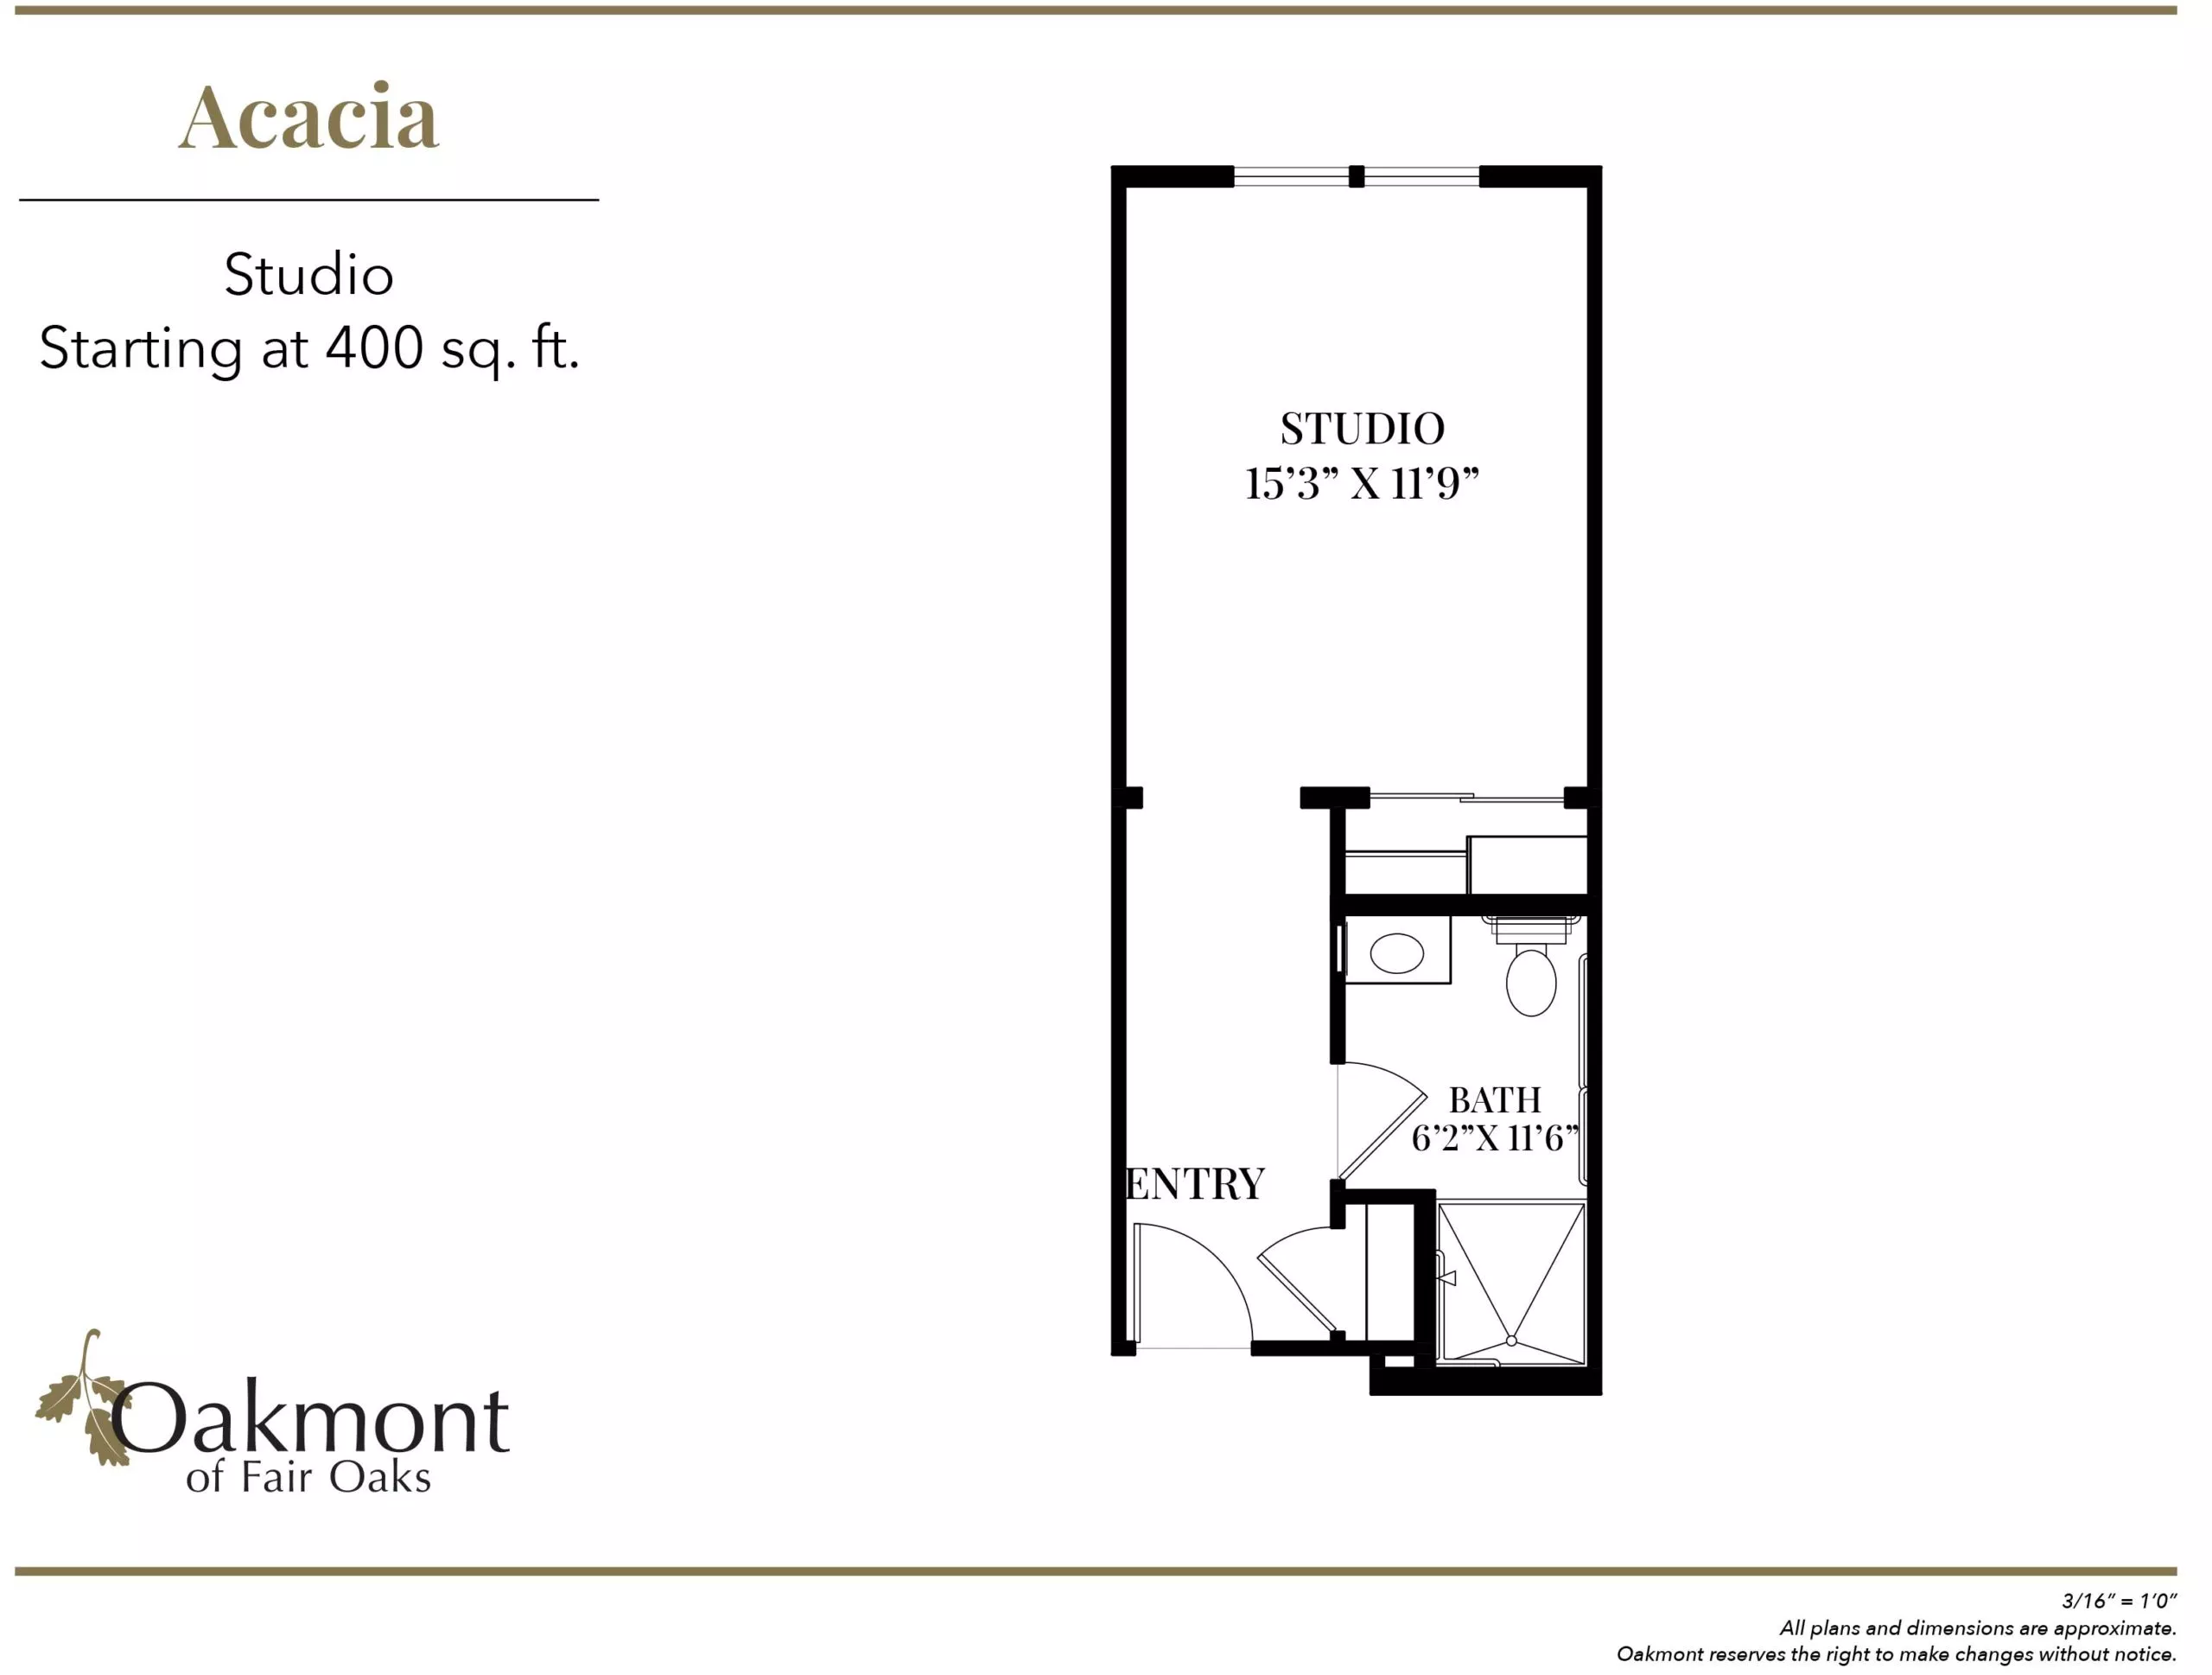 Acacia studio floor plan